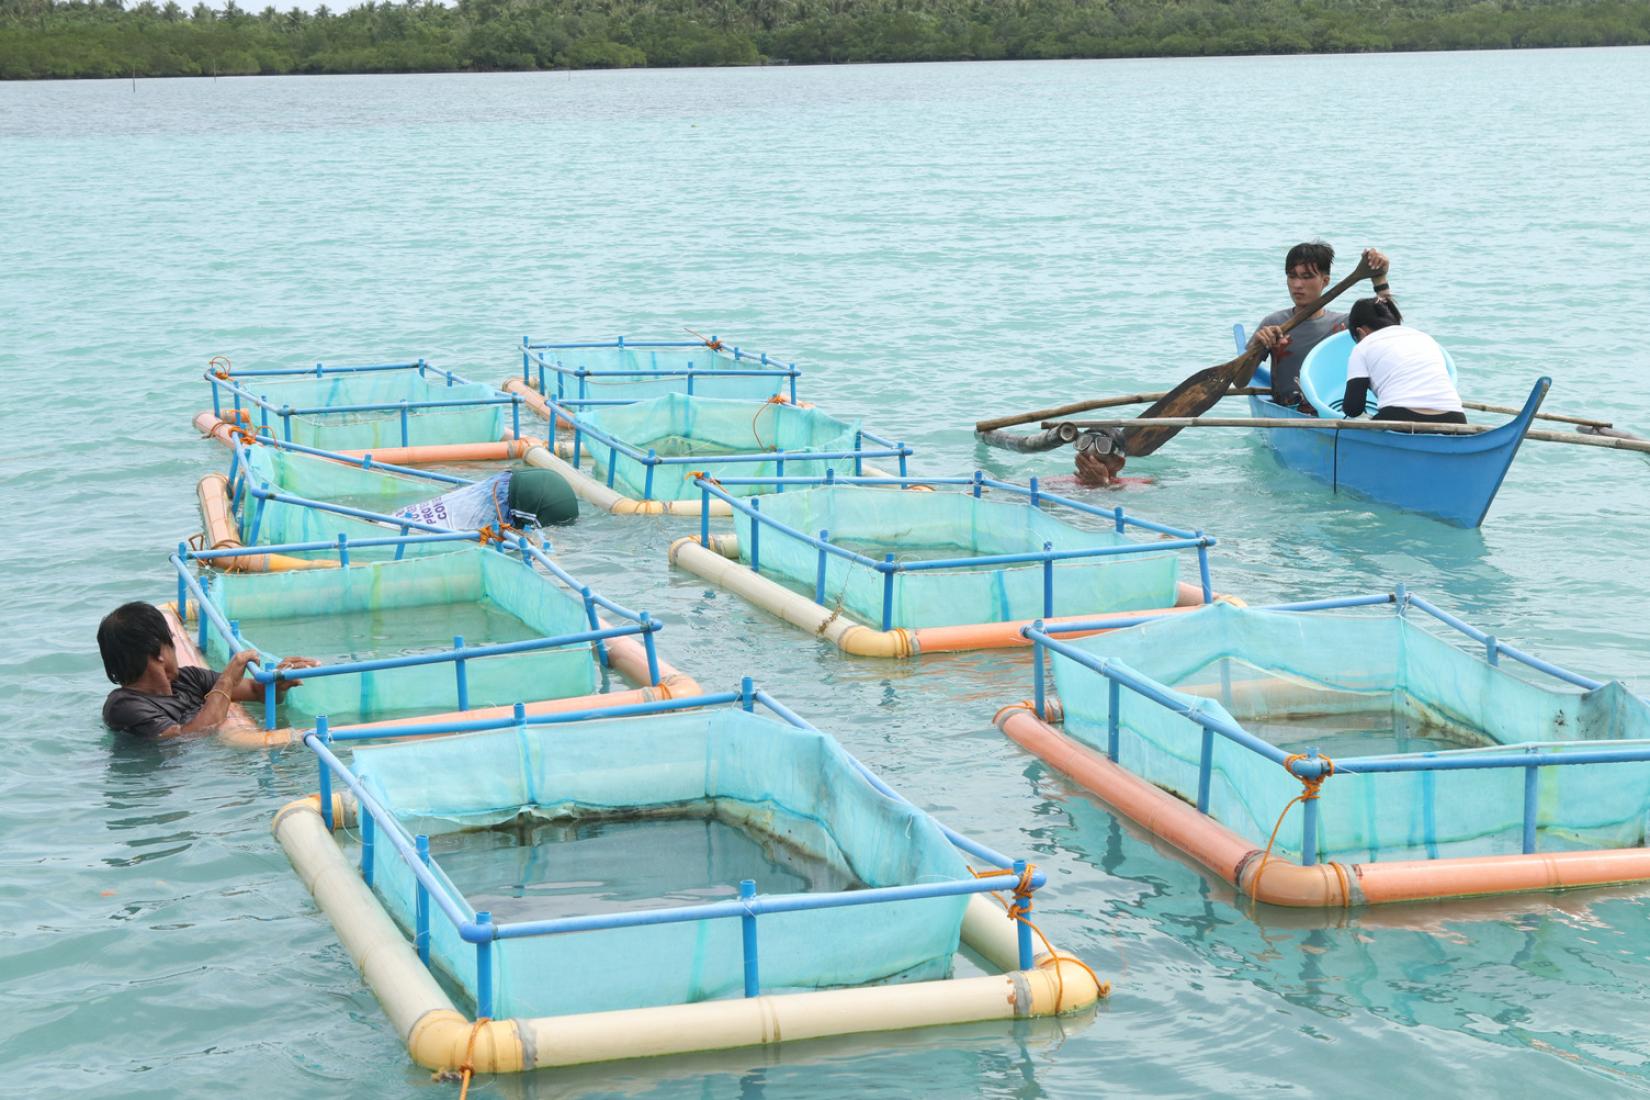 Sea cucumber ranchers working on floating hapas on Molocaboc Island, Sagay, Negros Occidental. 